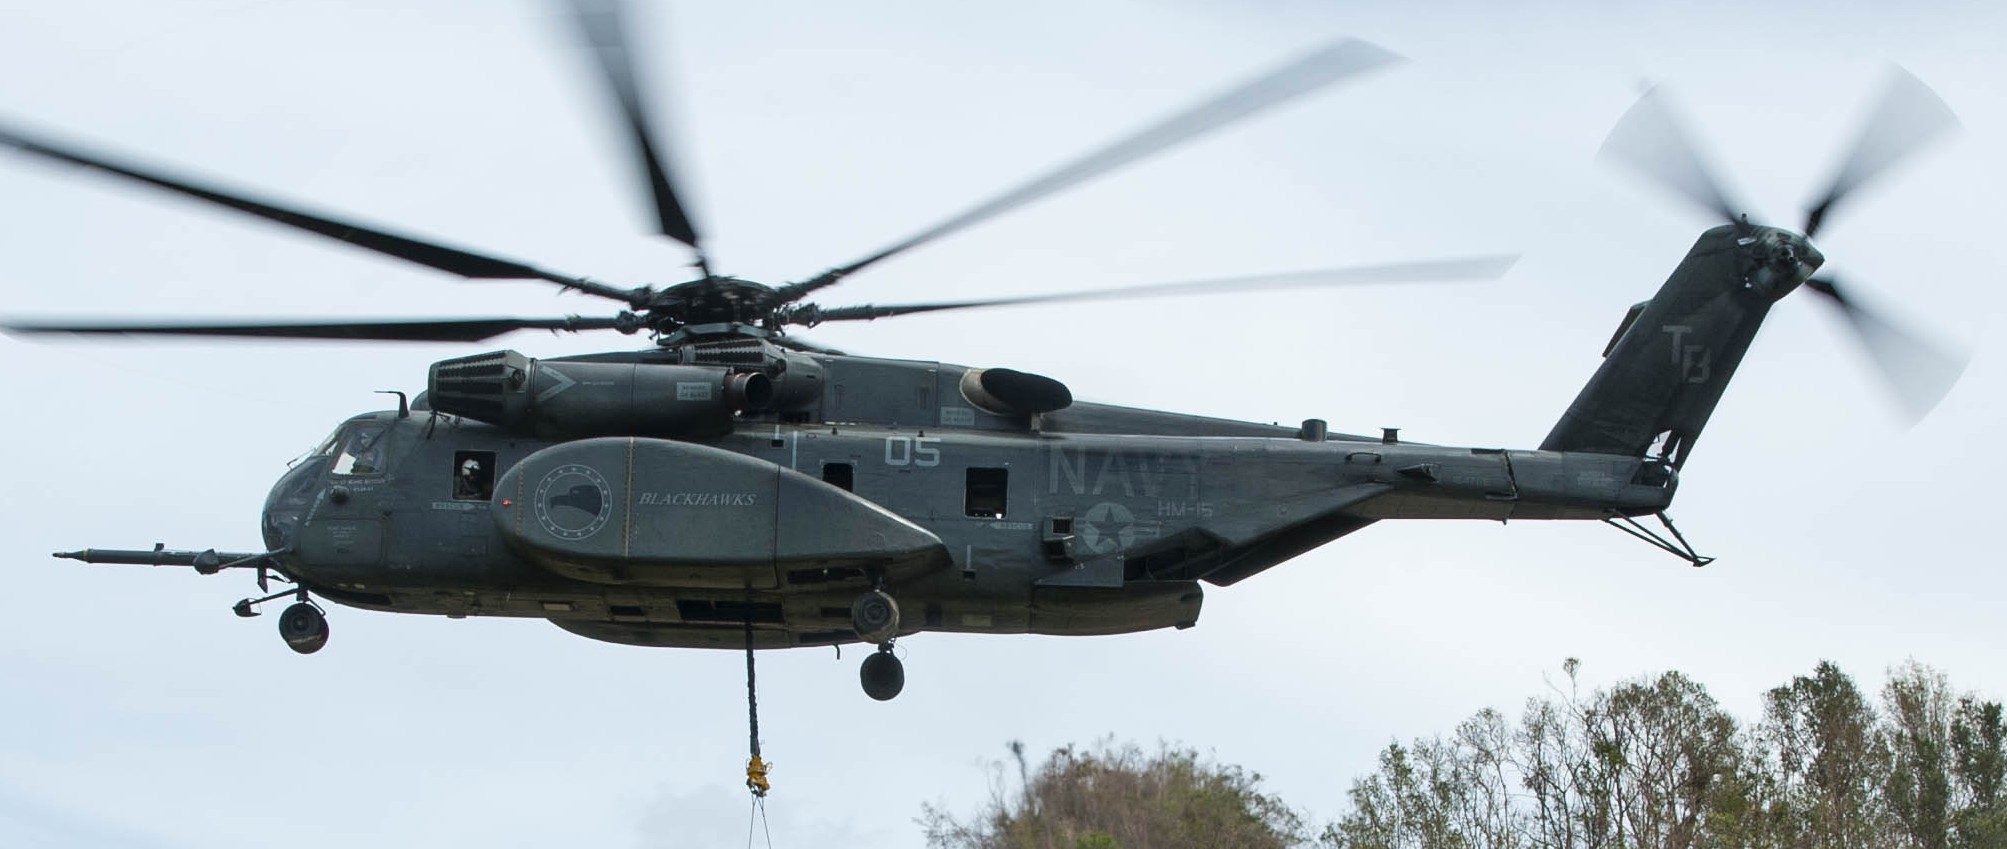 hm-15 blackhawks helicopter mine countermeasures squadron navy mh-53e sea dragon 12